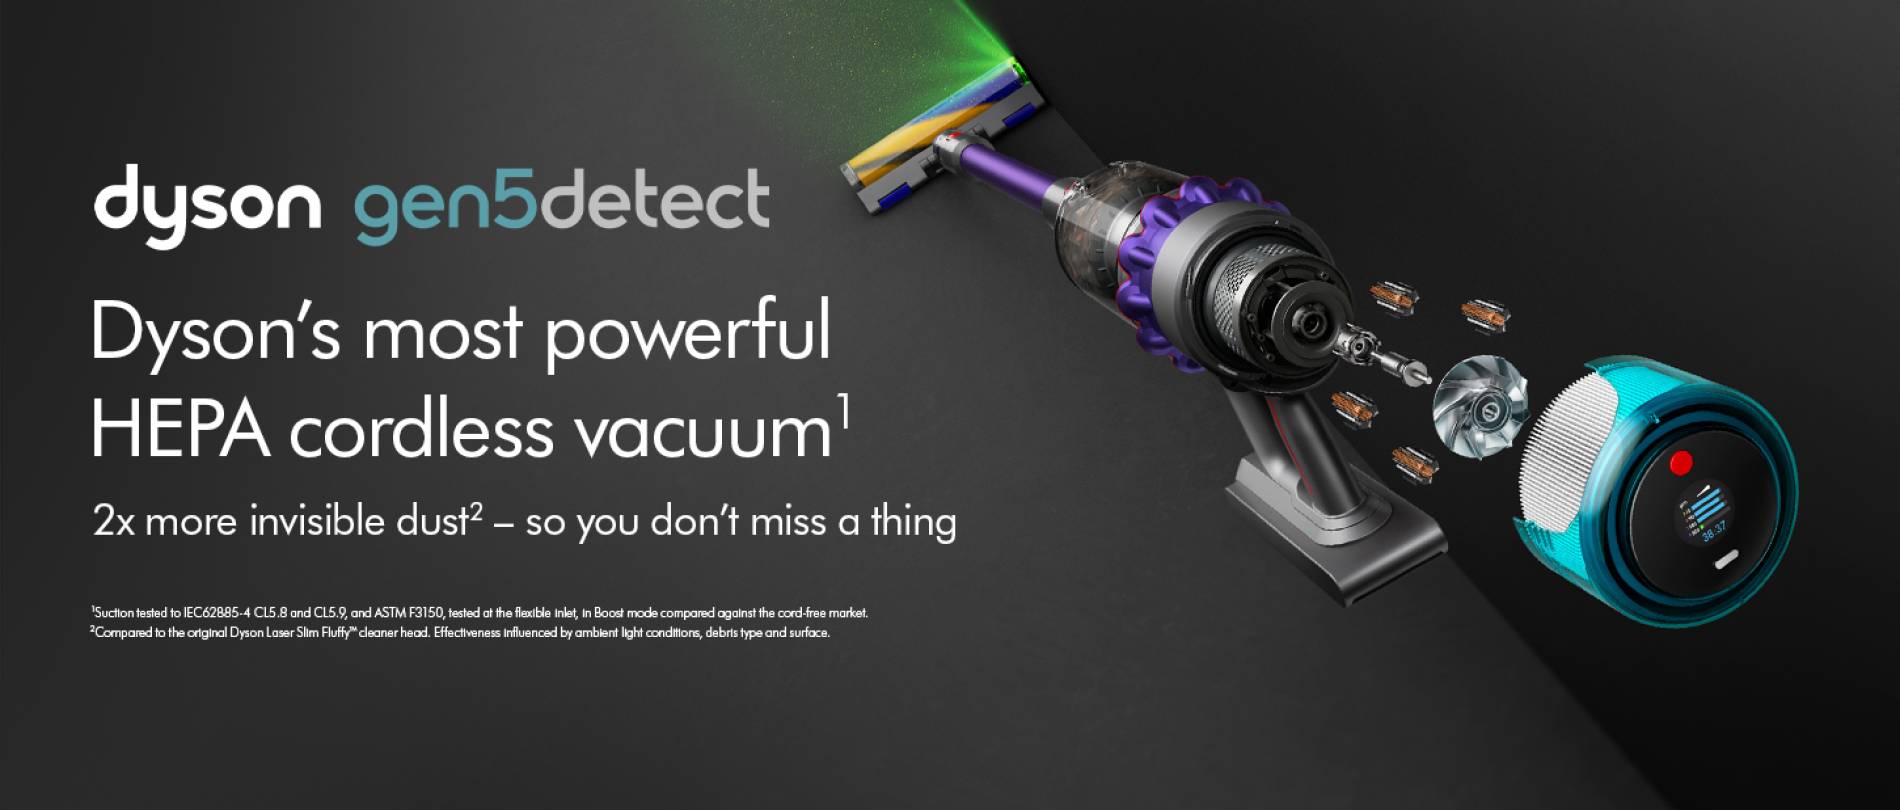 https://www.betterlifeuae.com/dyson-gen5-detect-absolute-vacuum-cleaner-sv23-gen5-dt-abs.html